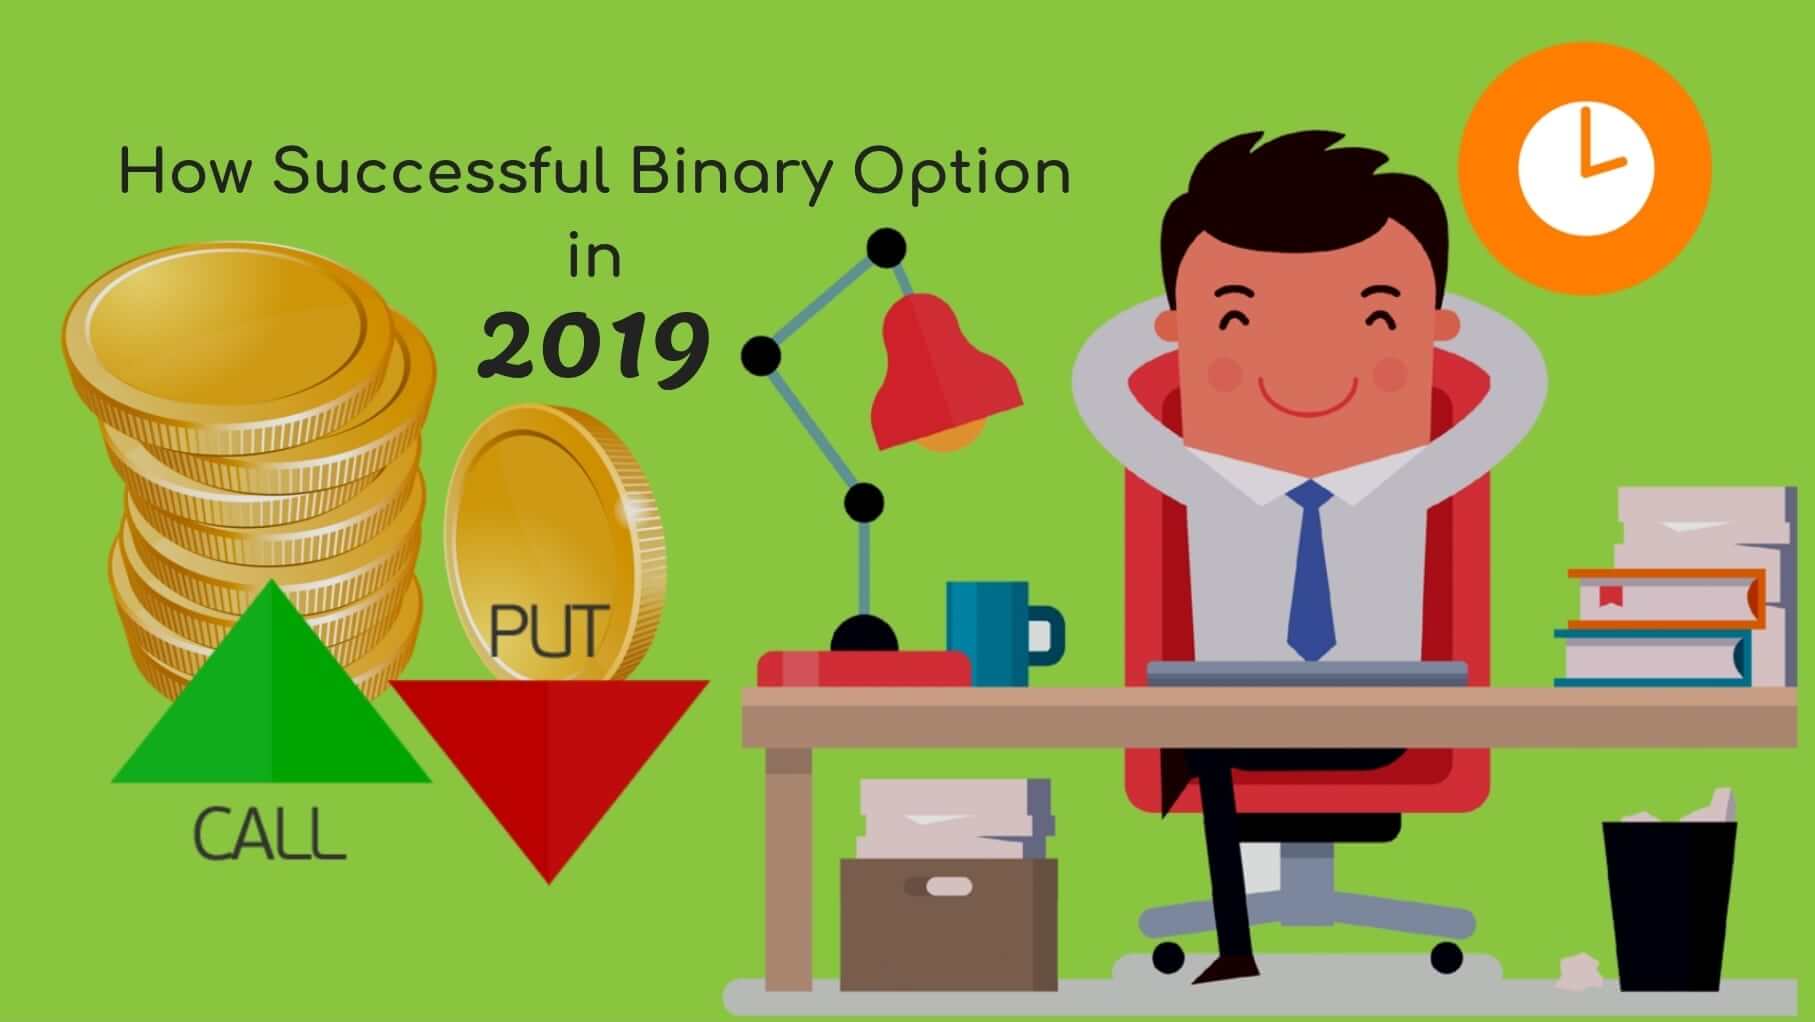 Successful binary options trading